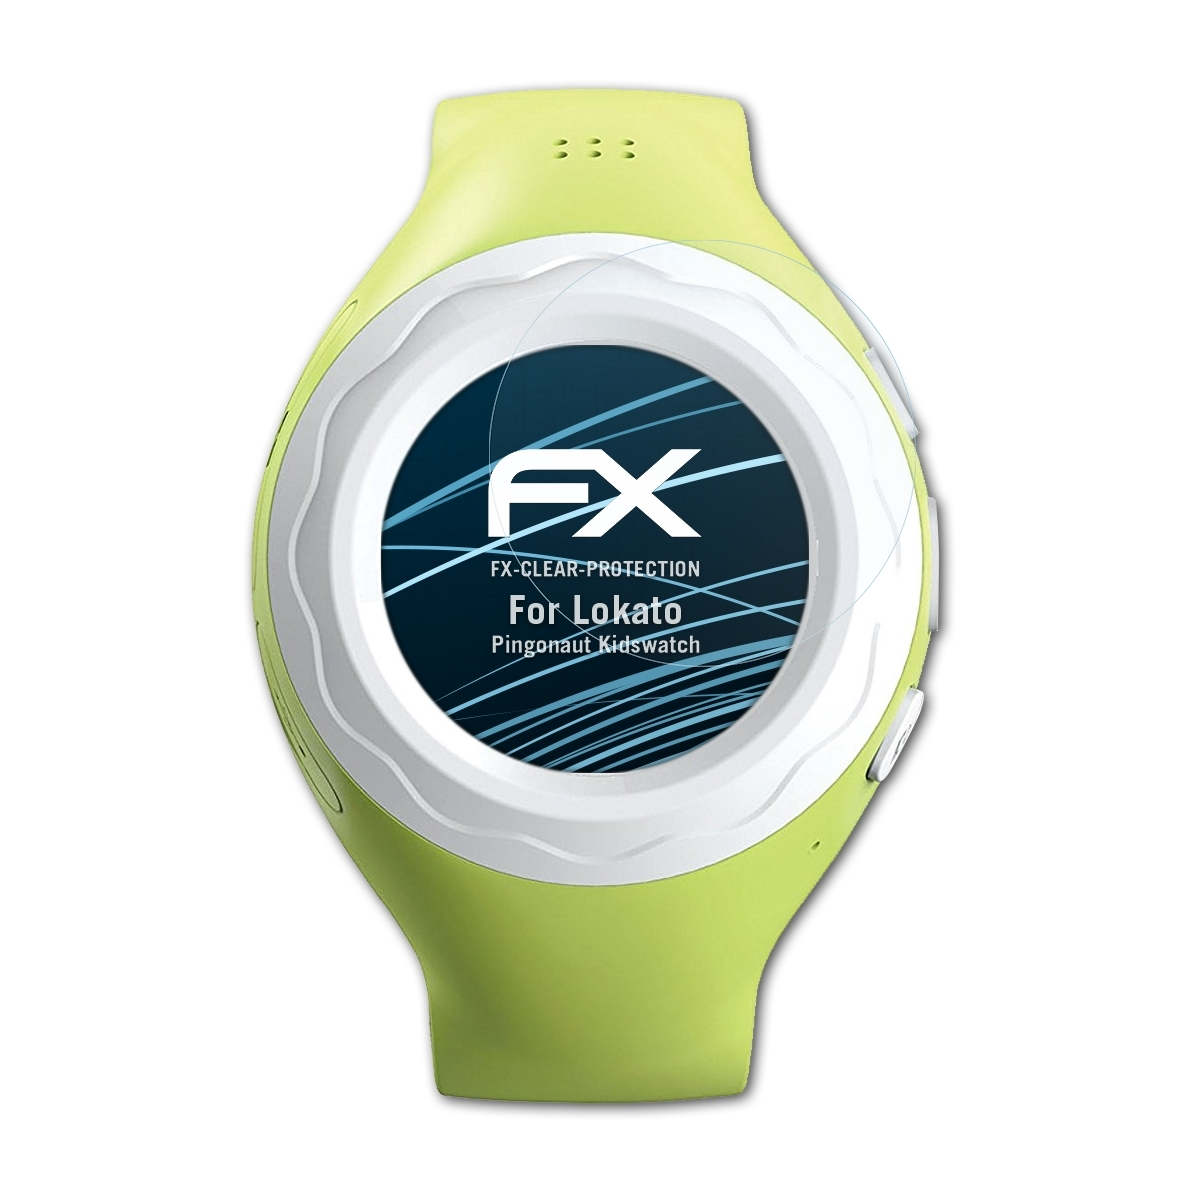 Kidswatch) Lokato 3x ATFOLIX FX-Clear Displayschutz(für Pingonaut